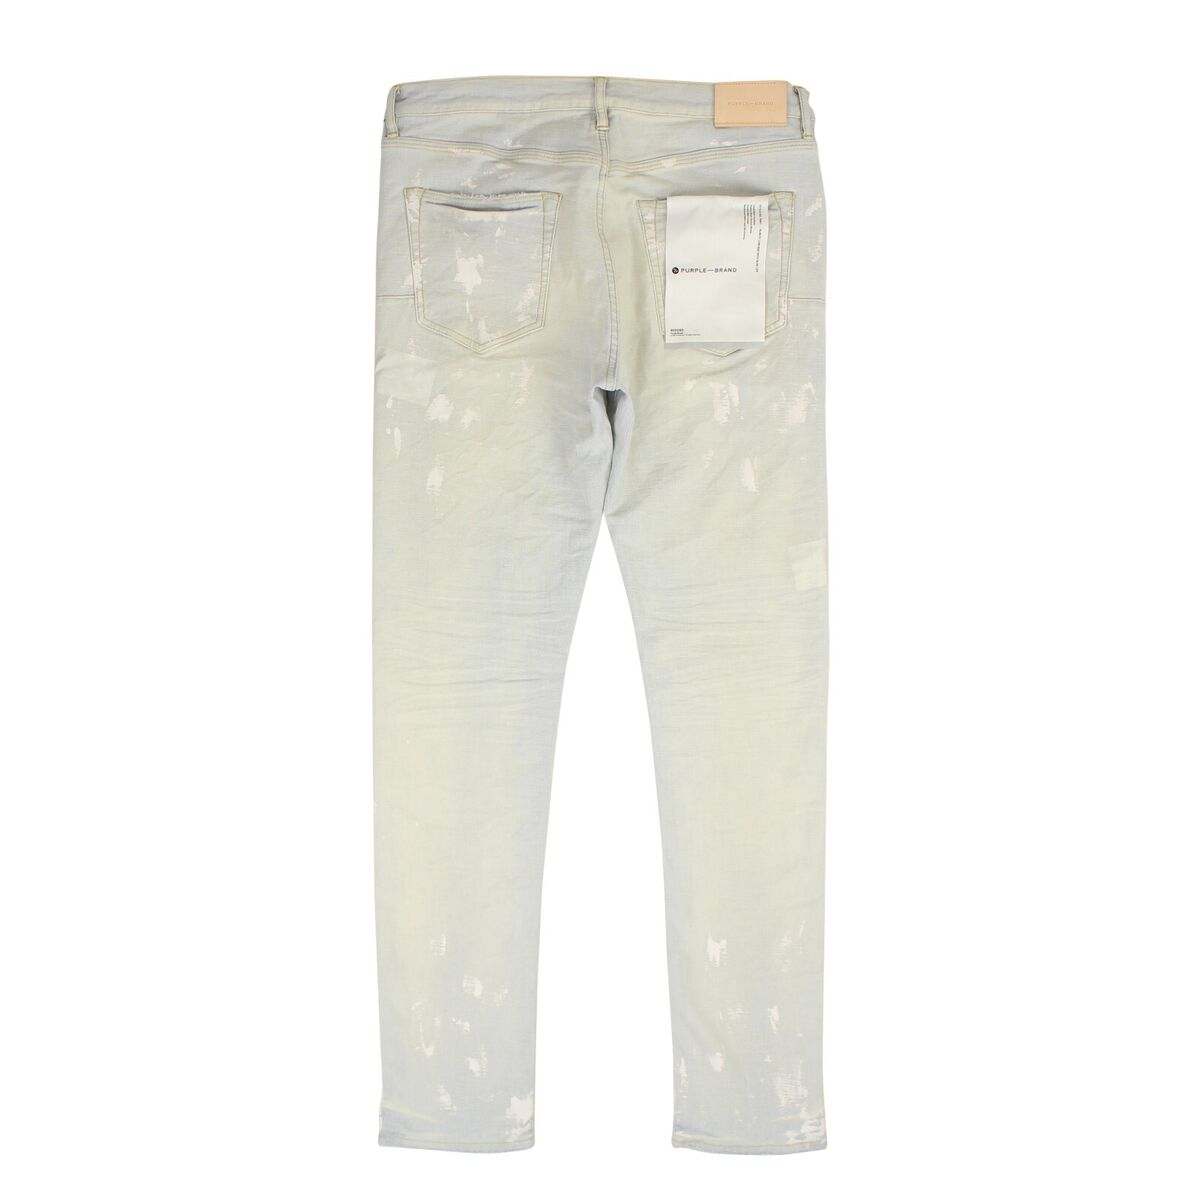 NWT PURPLE BRAND Cream Sprayed Reflective Paint Skinny Jeans Size 36/46 $275